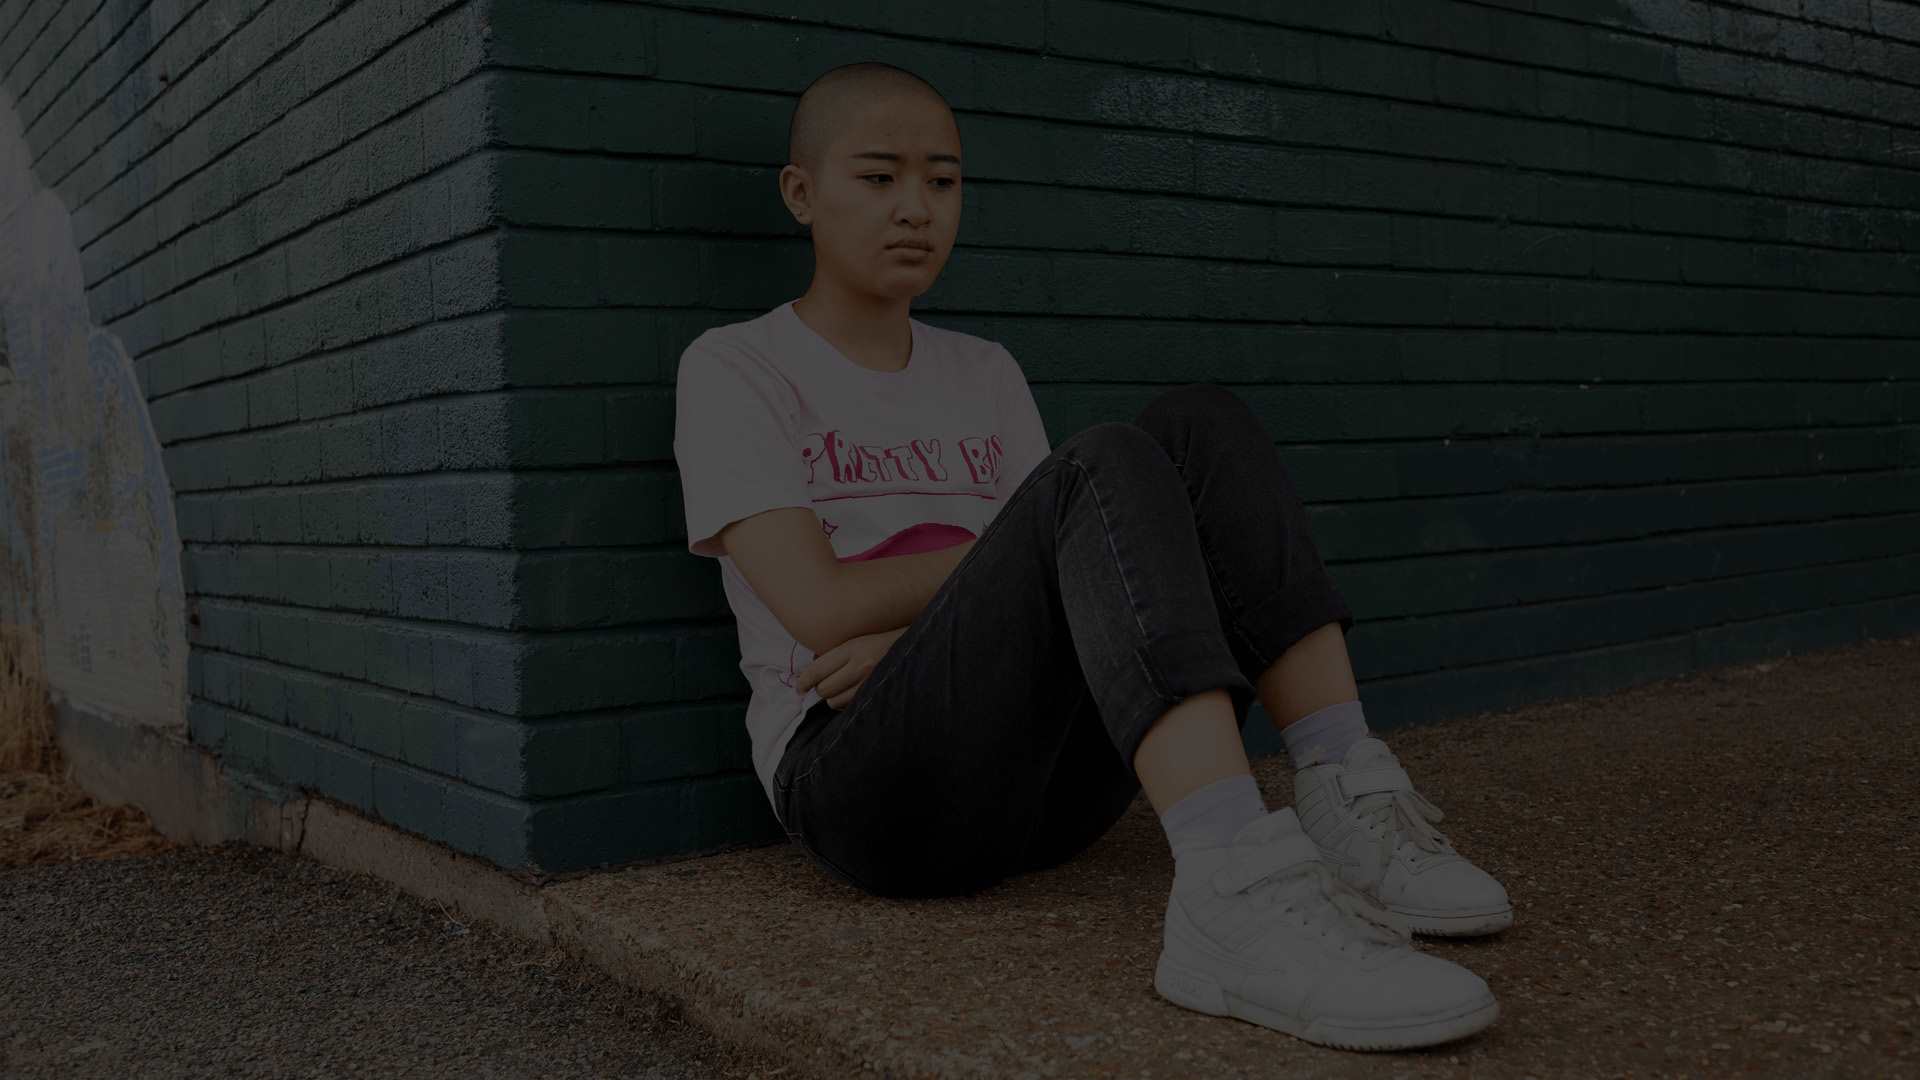 A person sitting against a brick wall